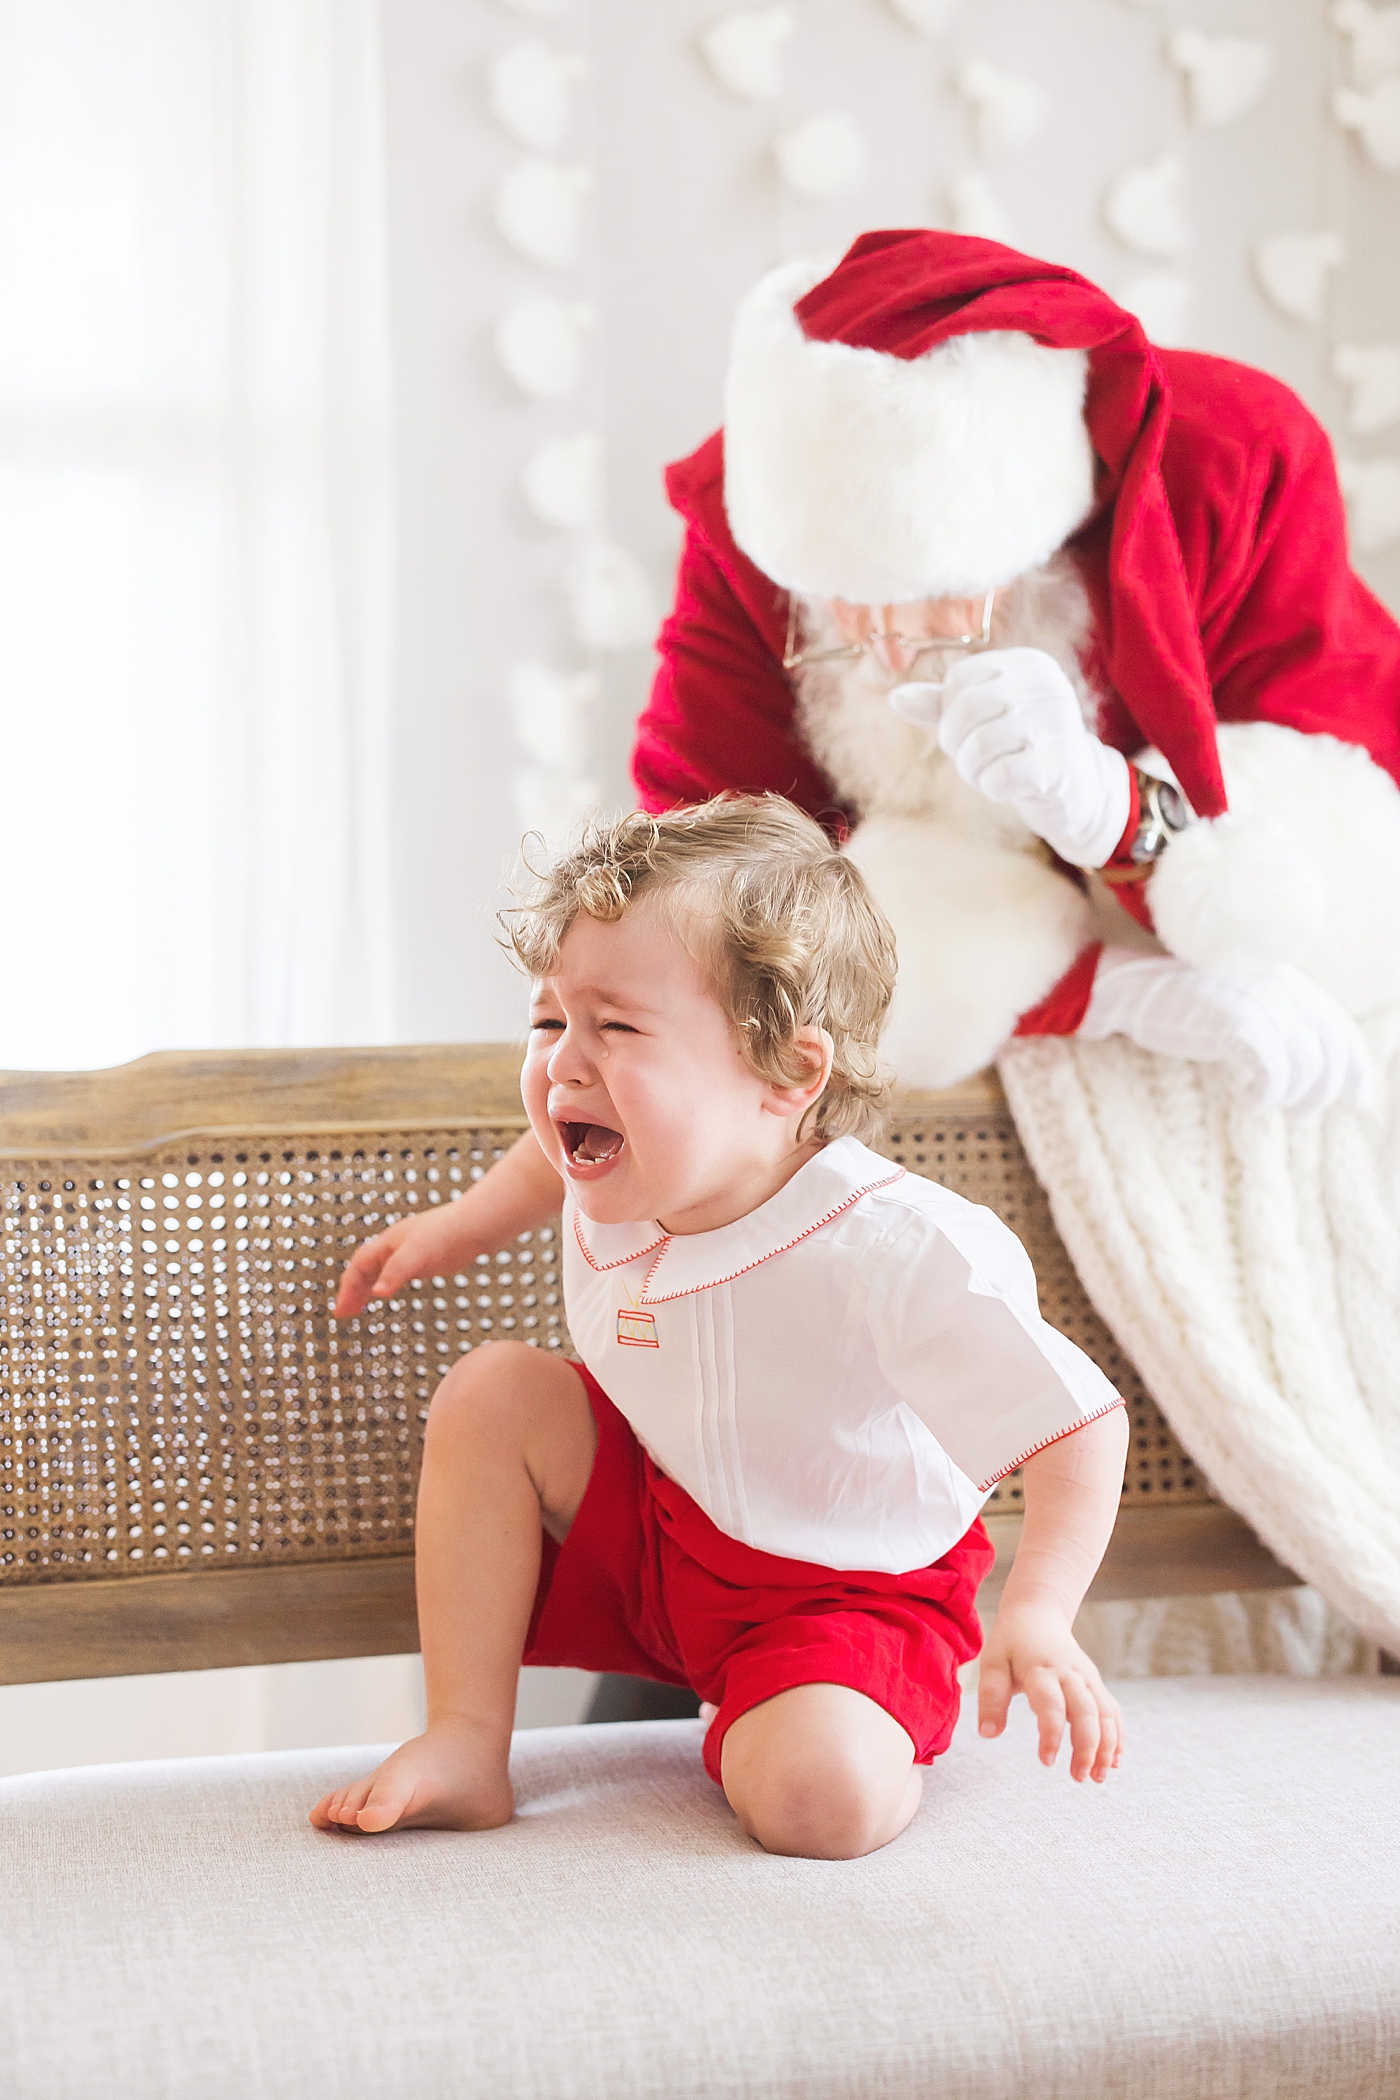 Toddler crying visiting Santa. Photo by Fresh Light Photography.